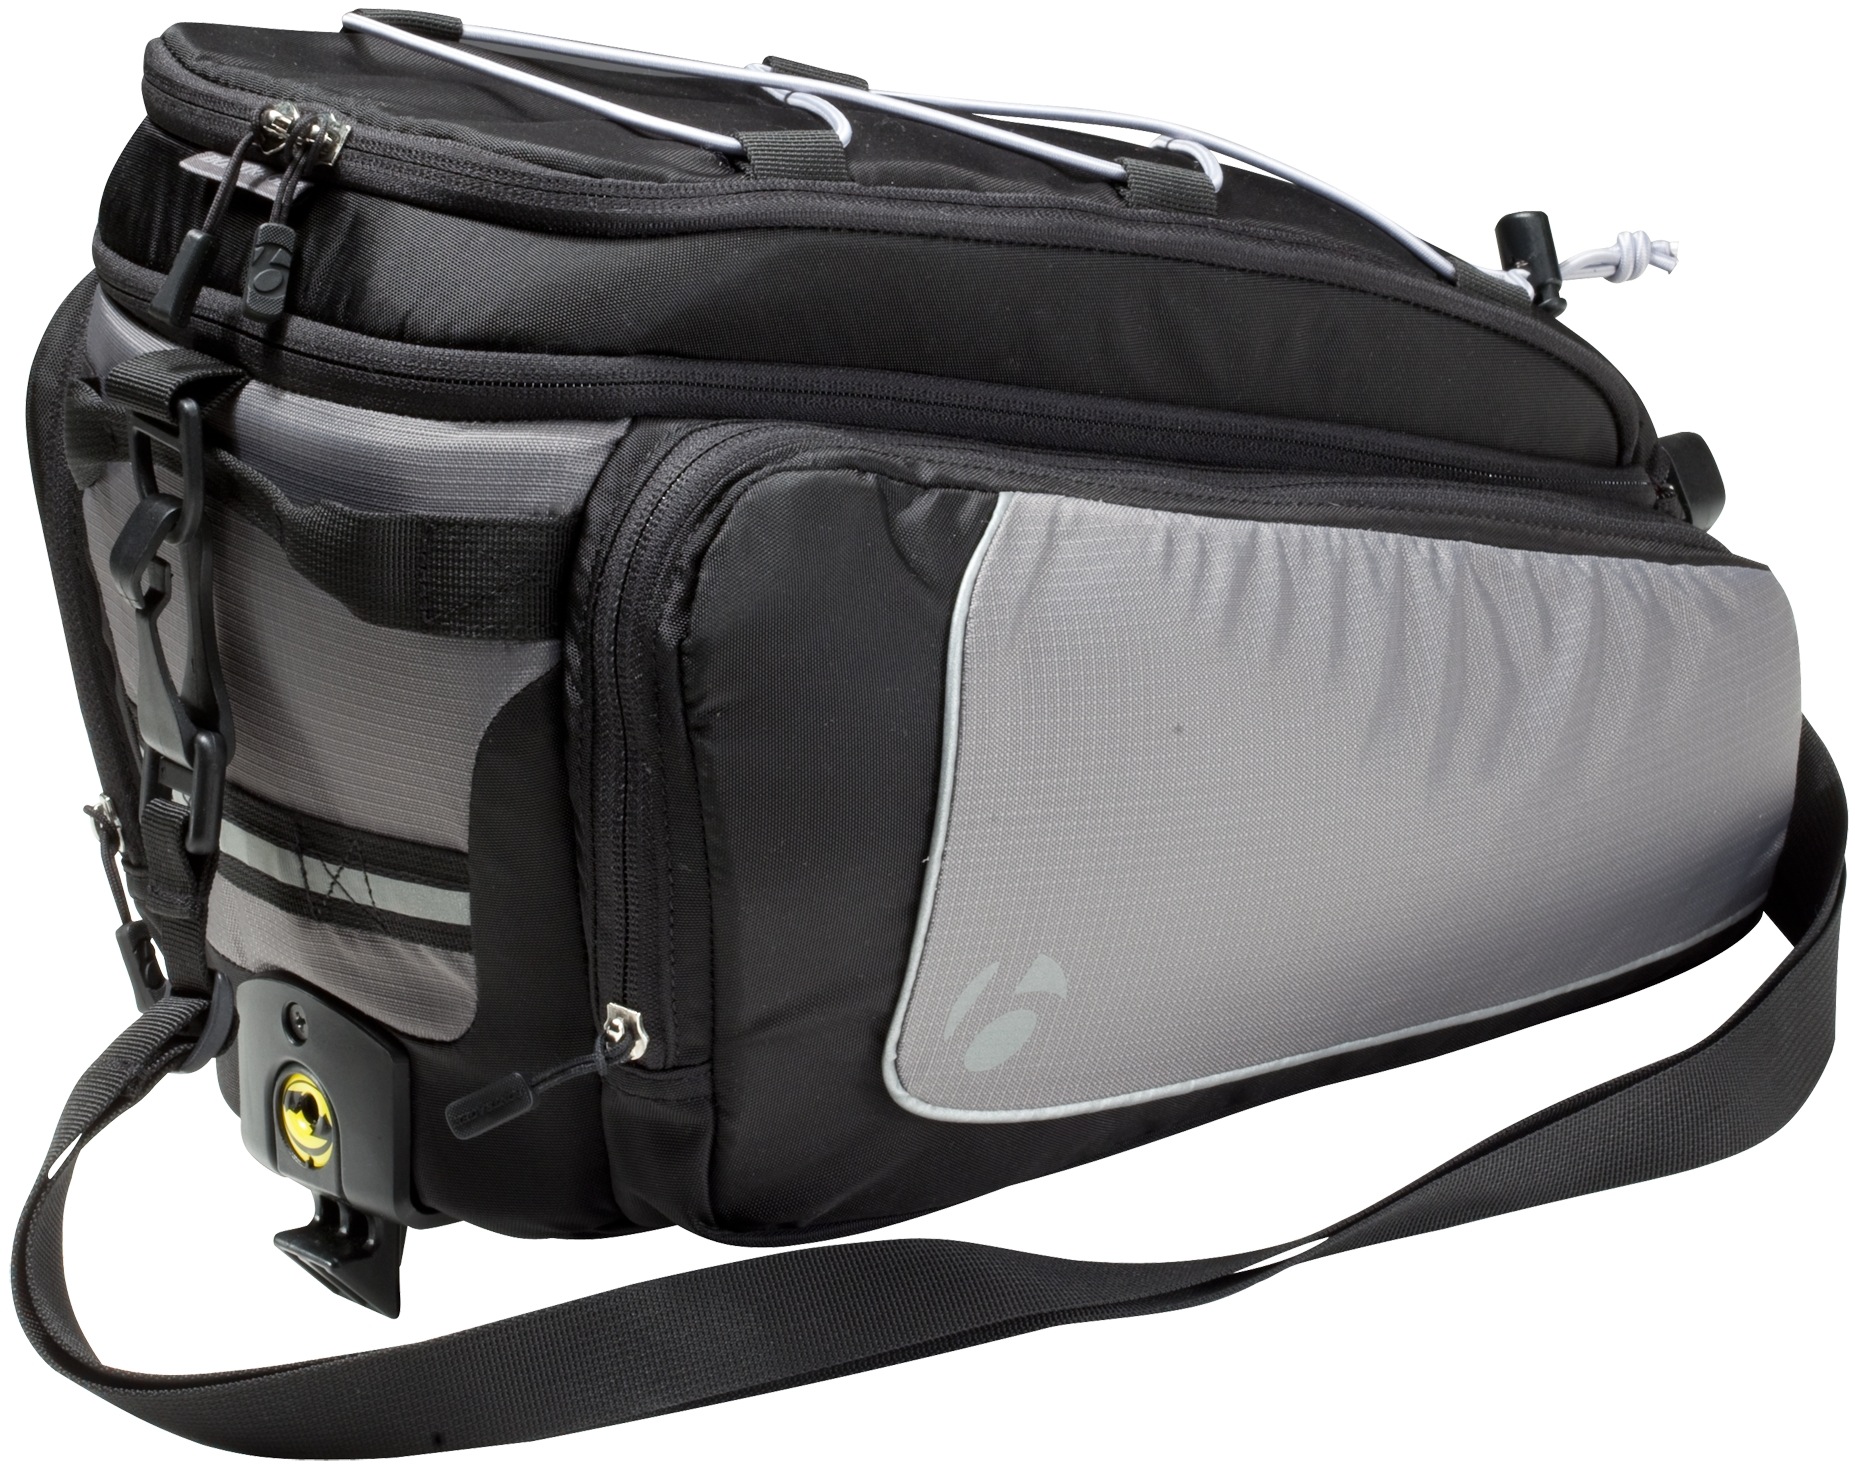 Bontrager Interchange Deluxe Rear Trunk Bag - Bags - Accessories - Shop ...